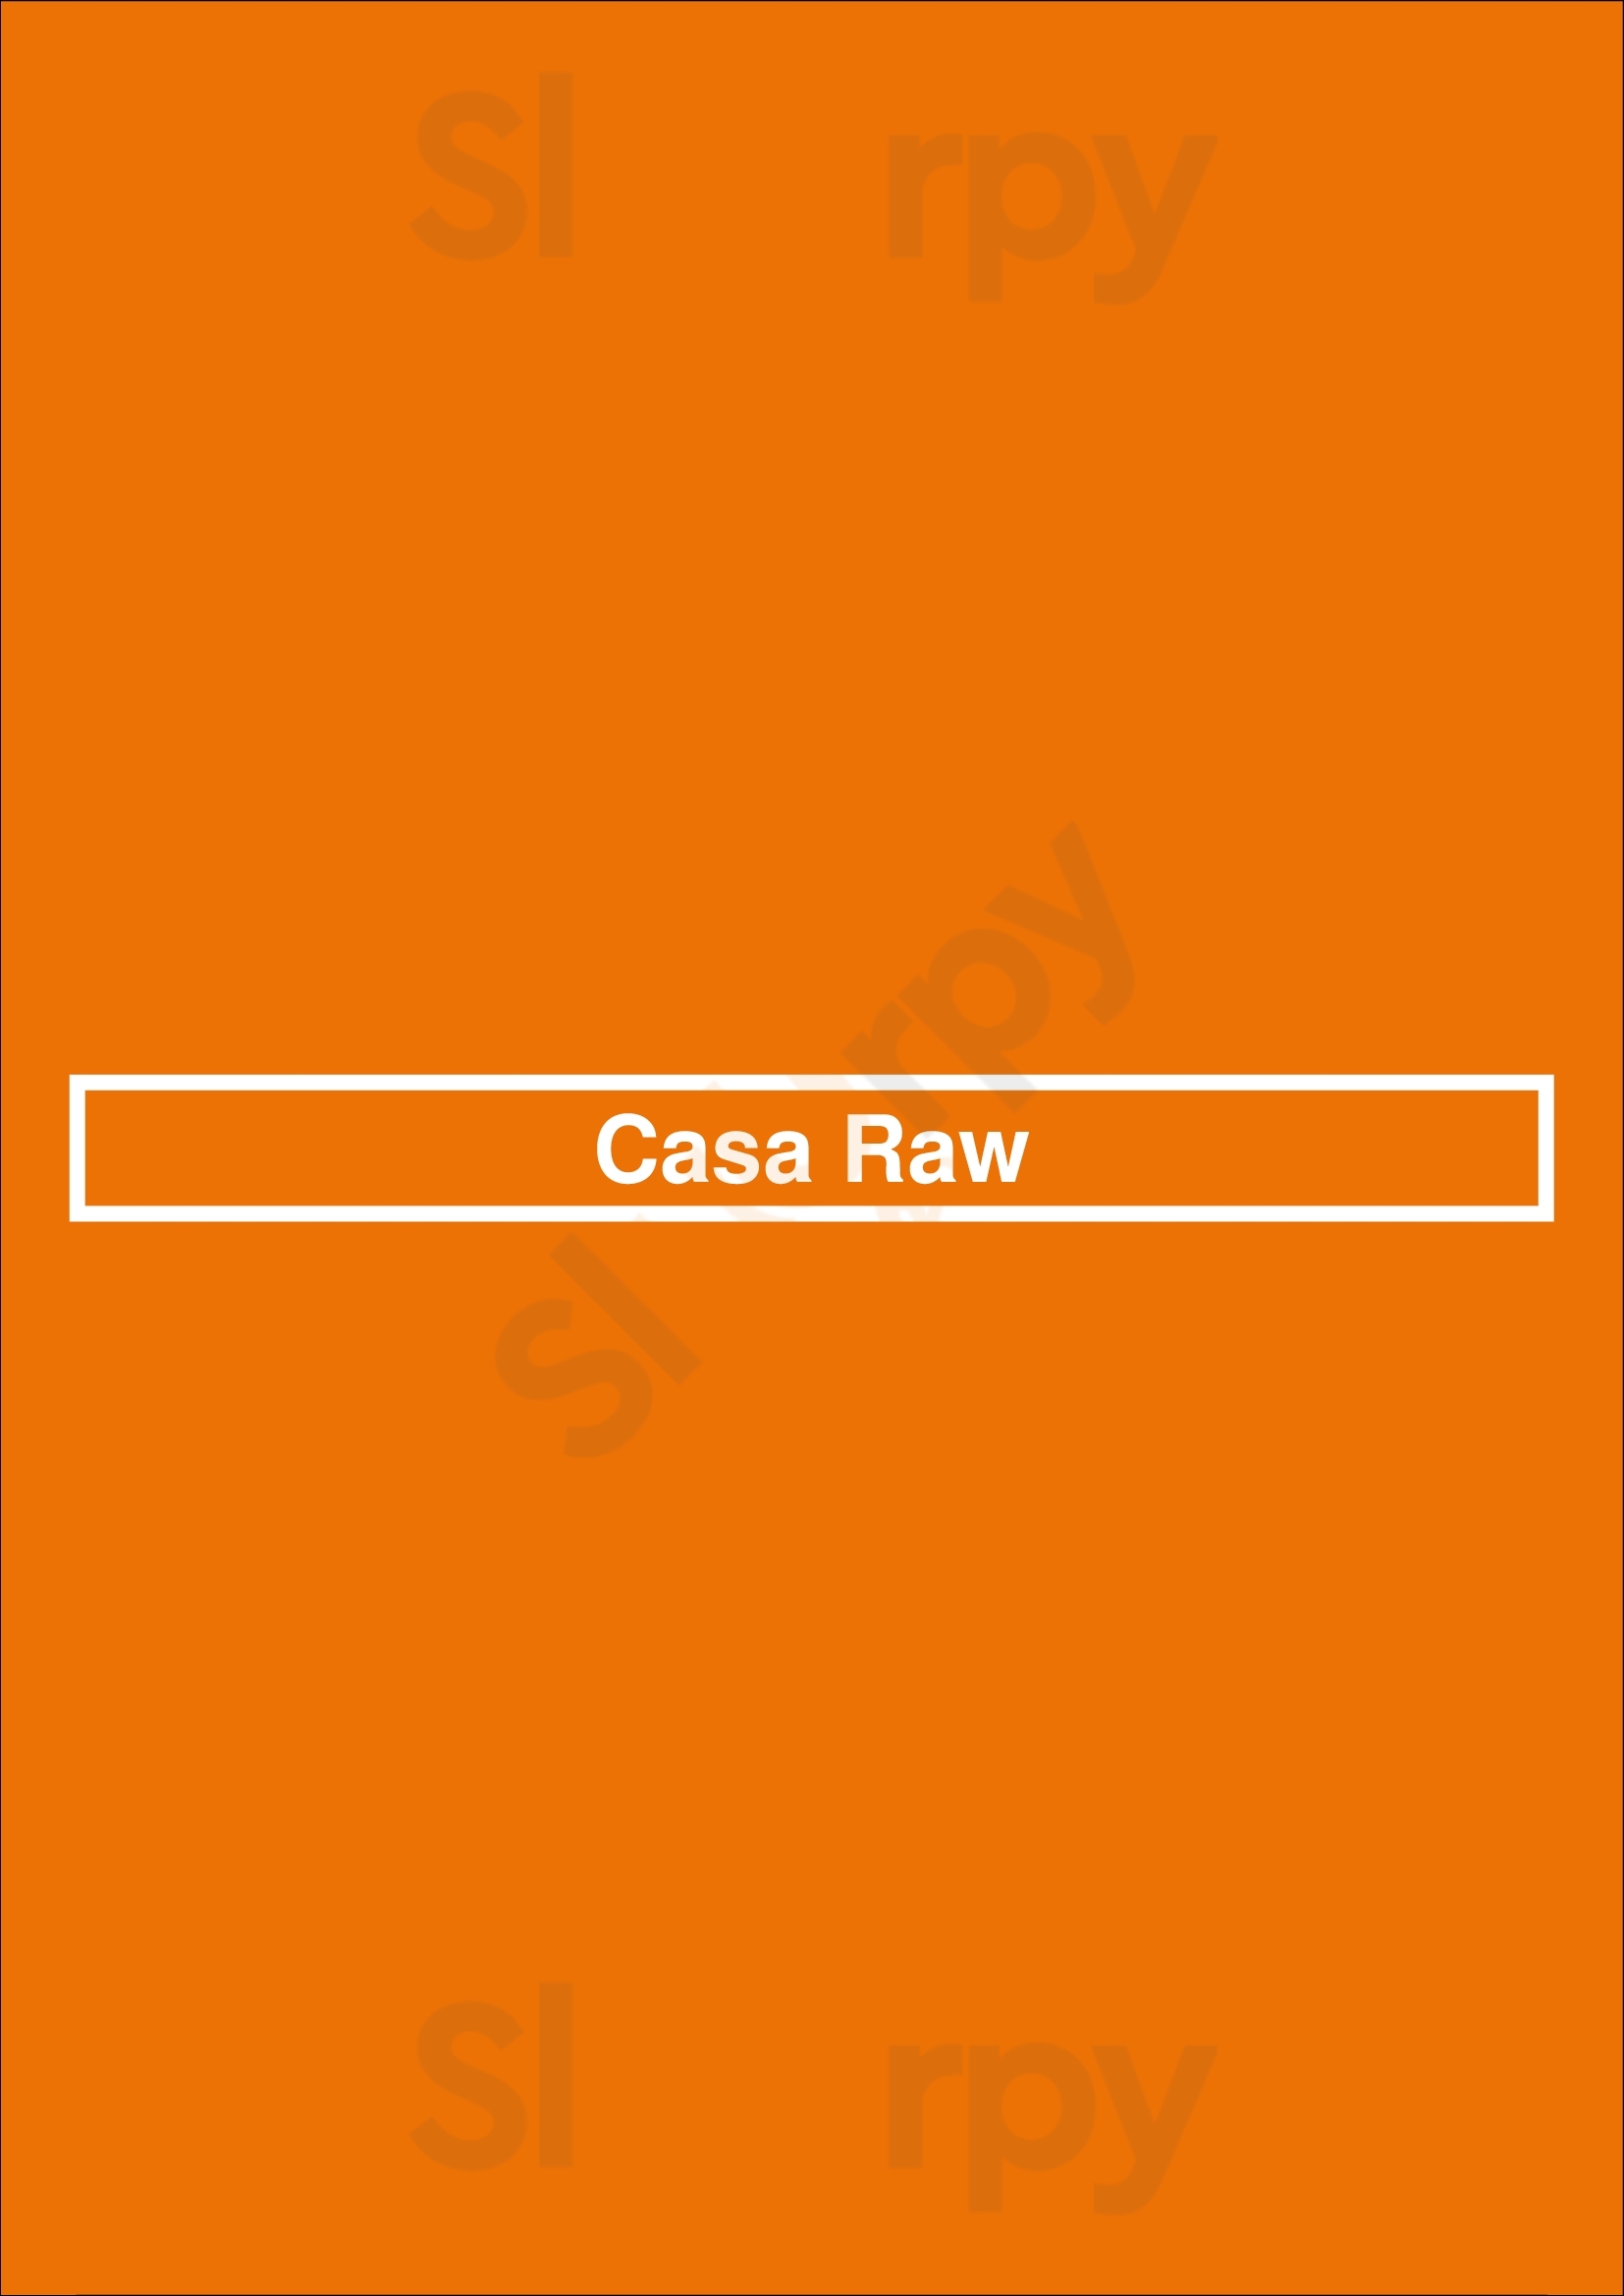 Casa Raw São Paulo Menu - 1